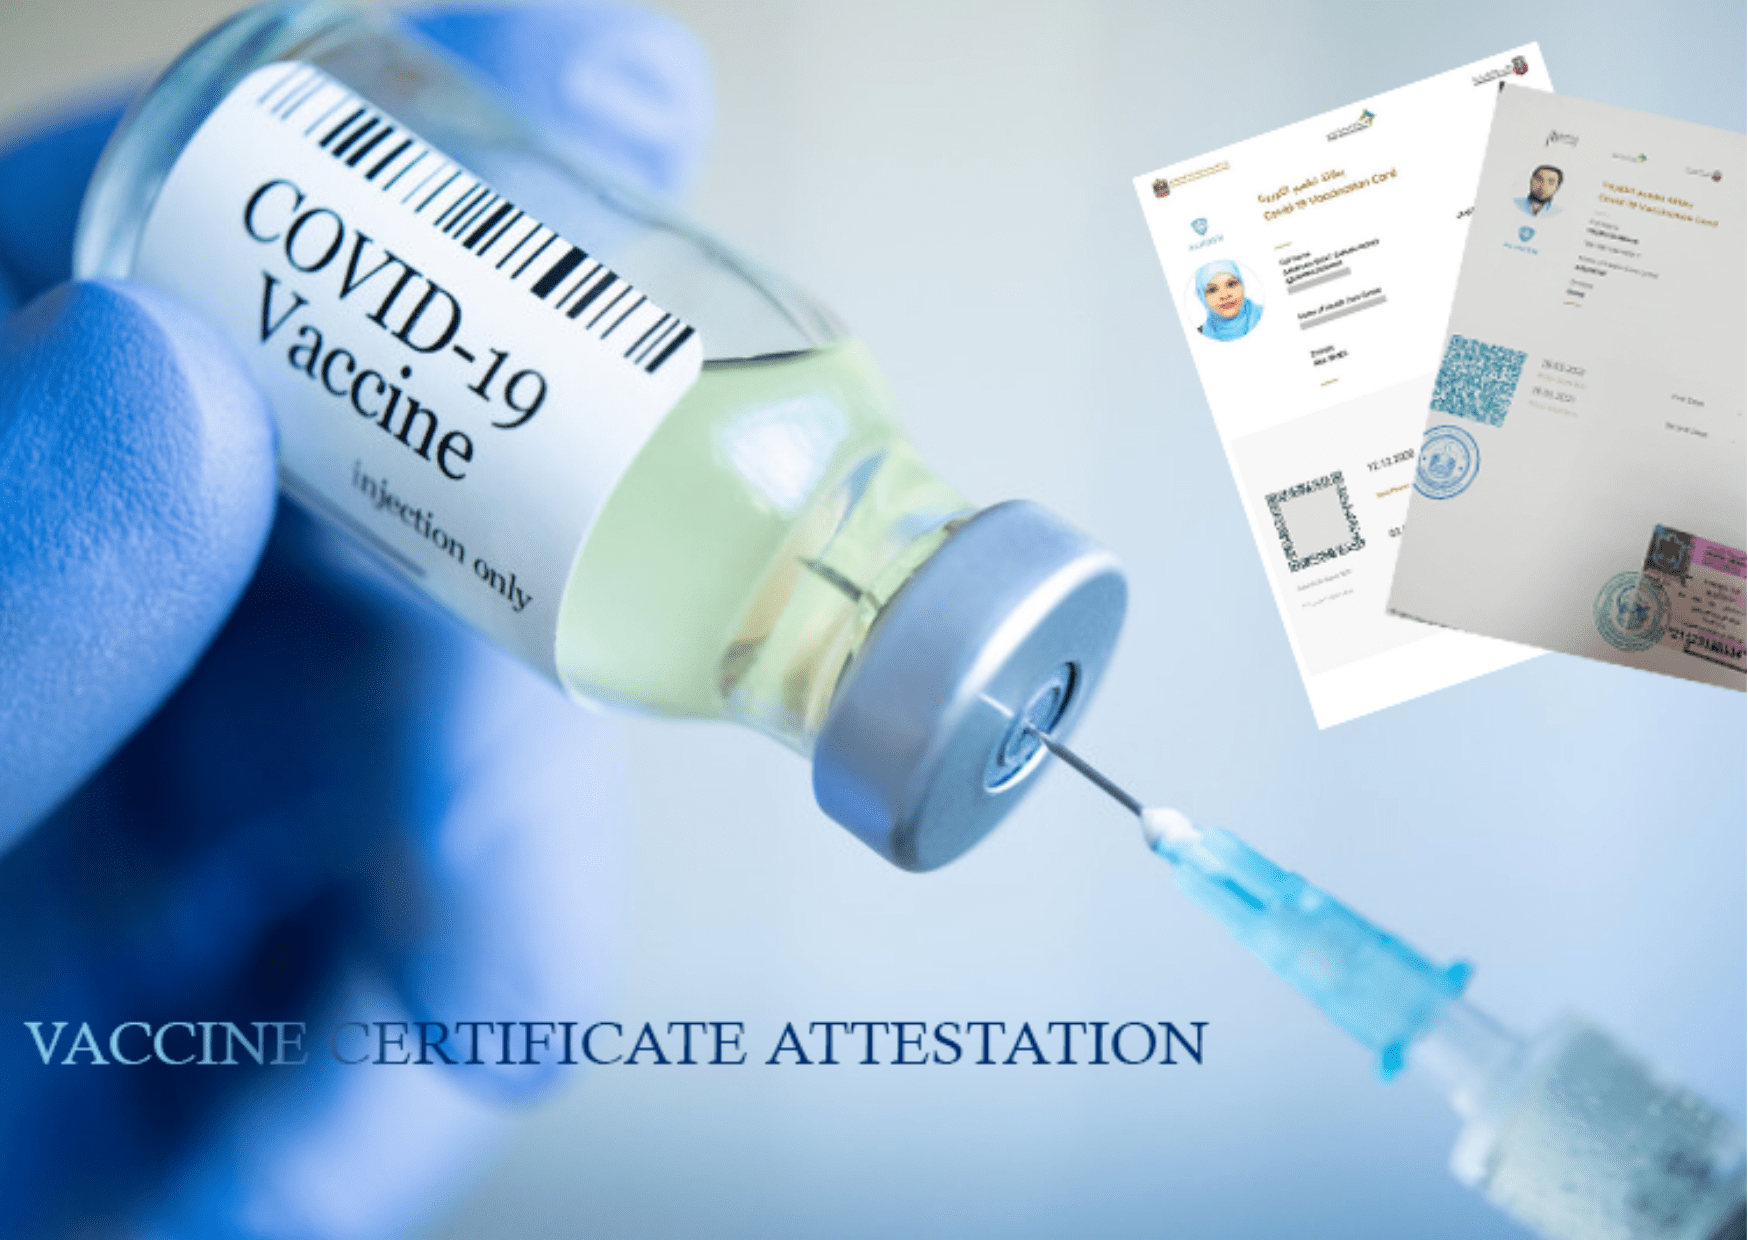  uae vaccine certificate attestation